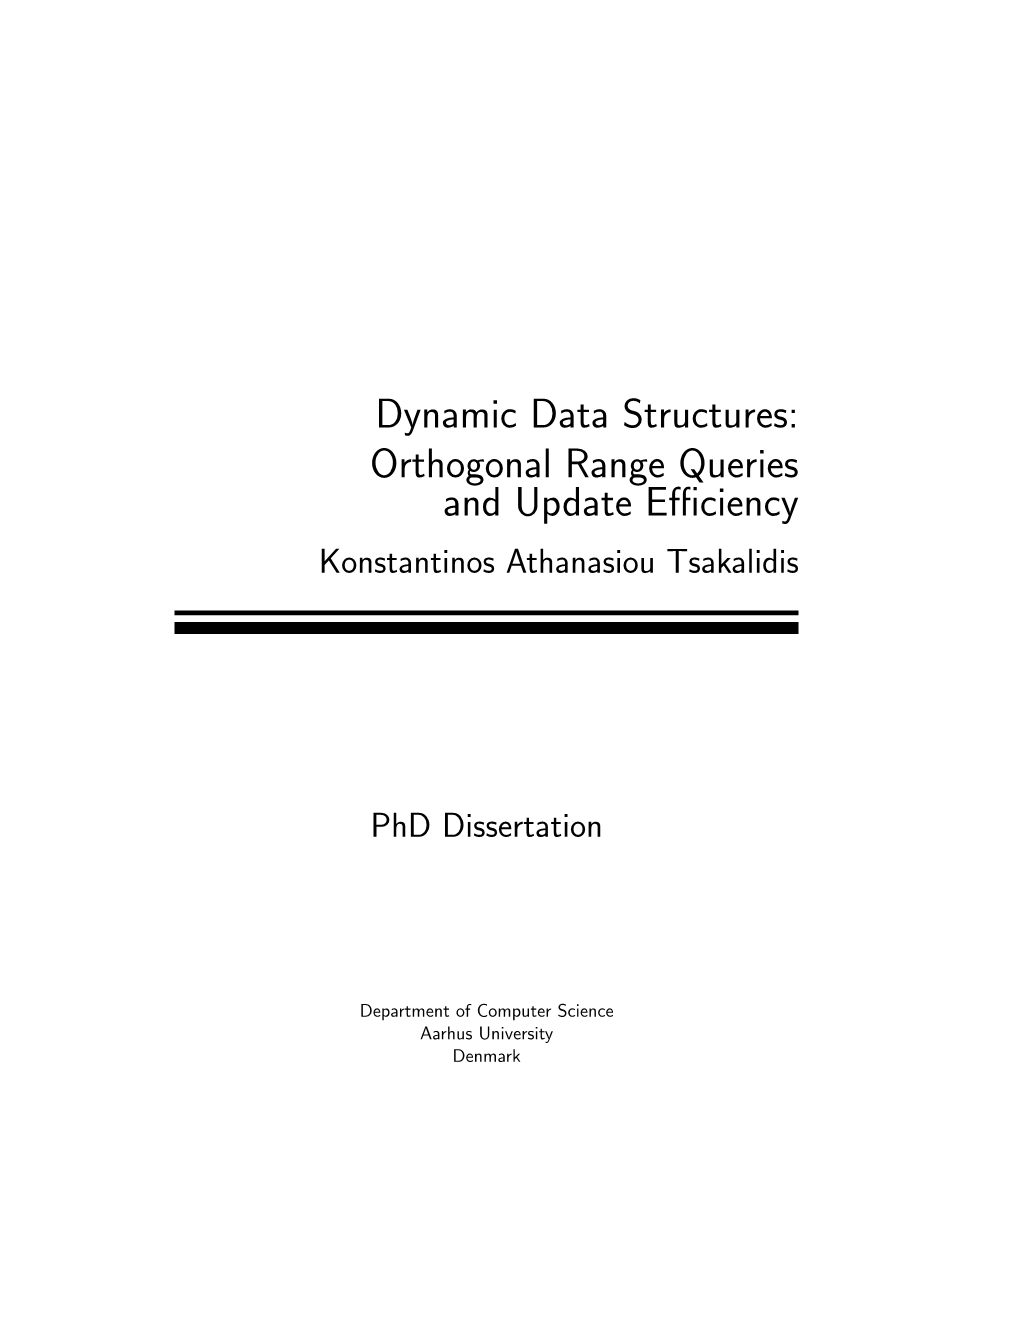 Dynamic Data Structures: Orthogonal Range Queries and Update Eﬃciency Konstantinos Athanasiou Tsakalidis